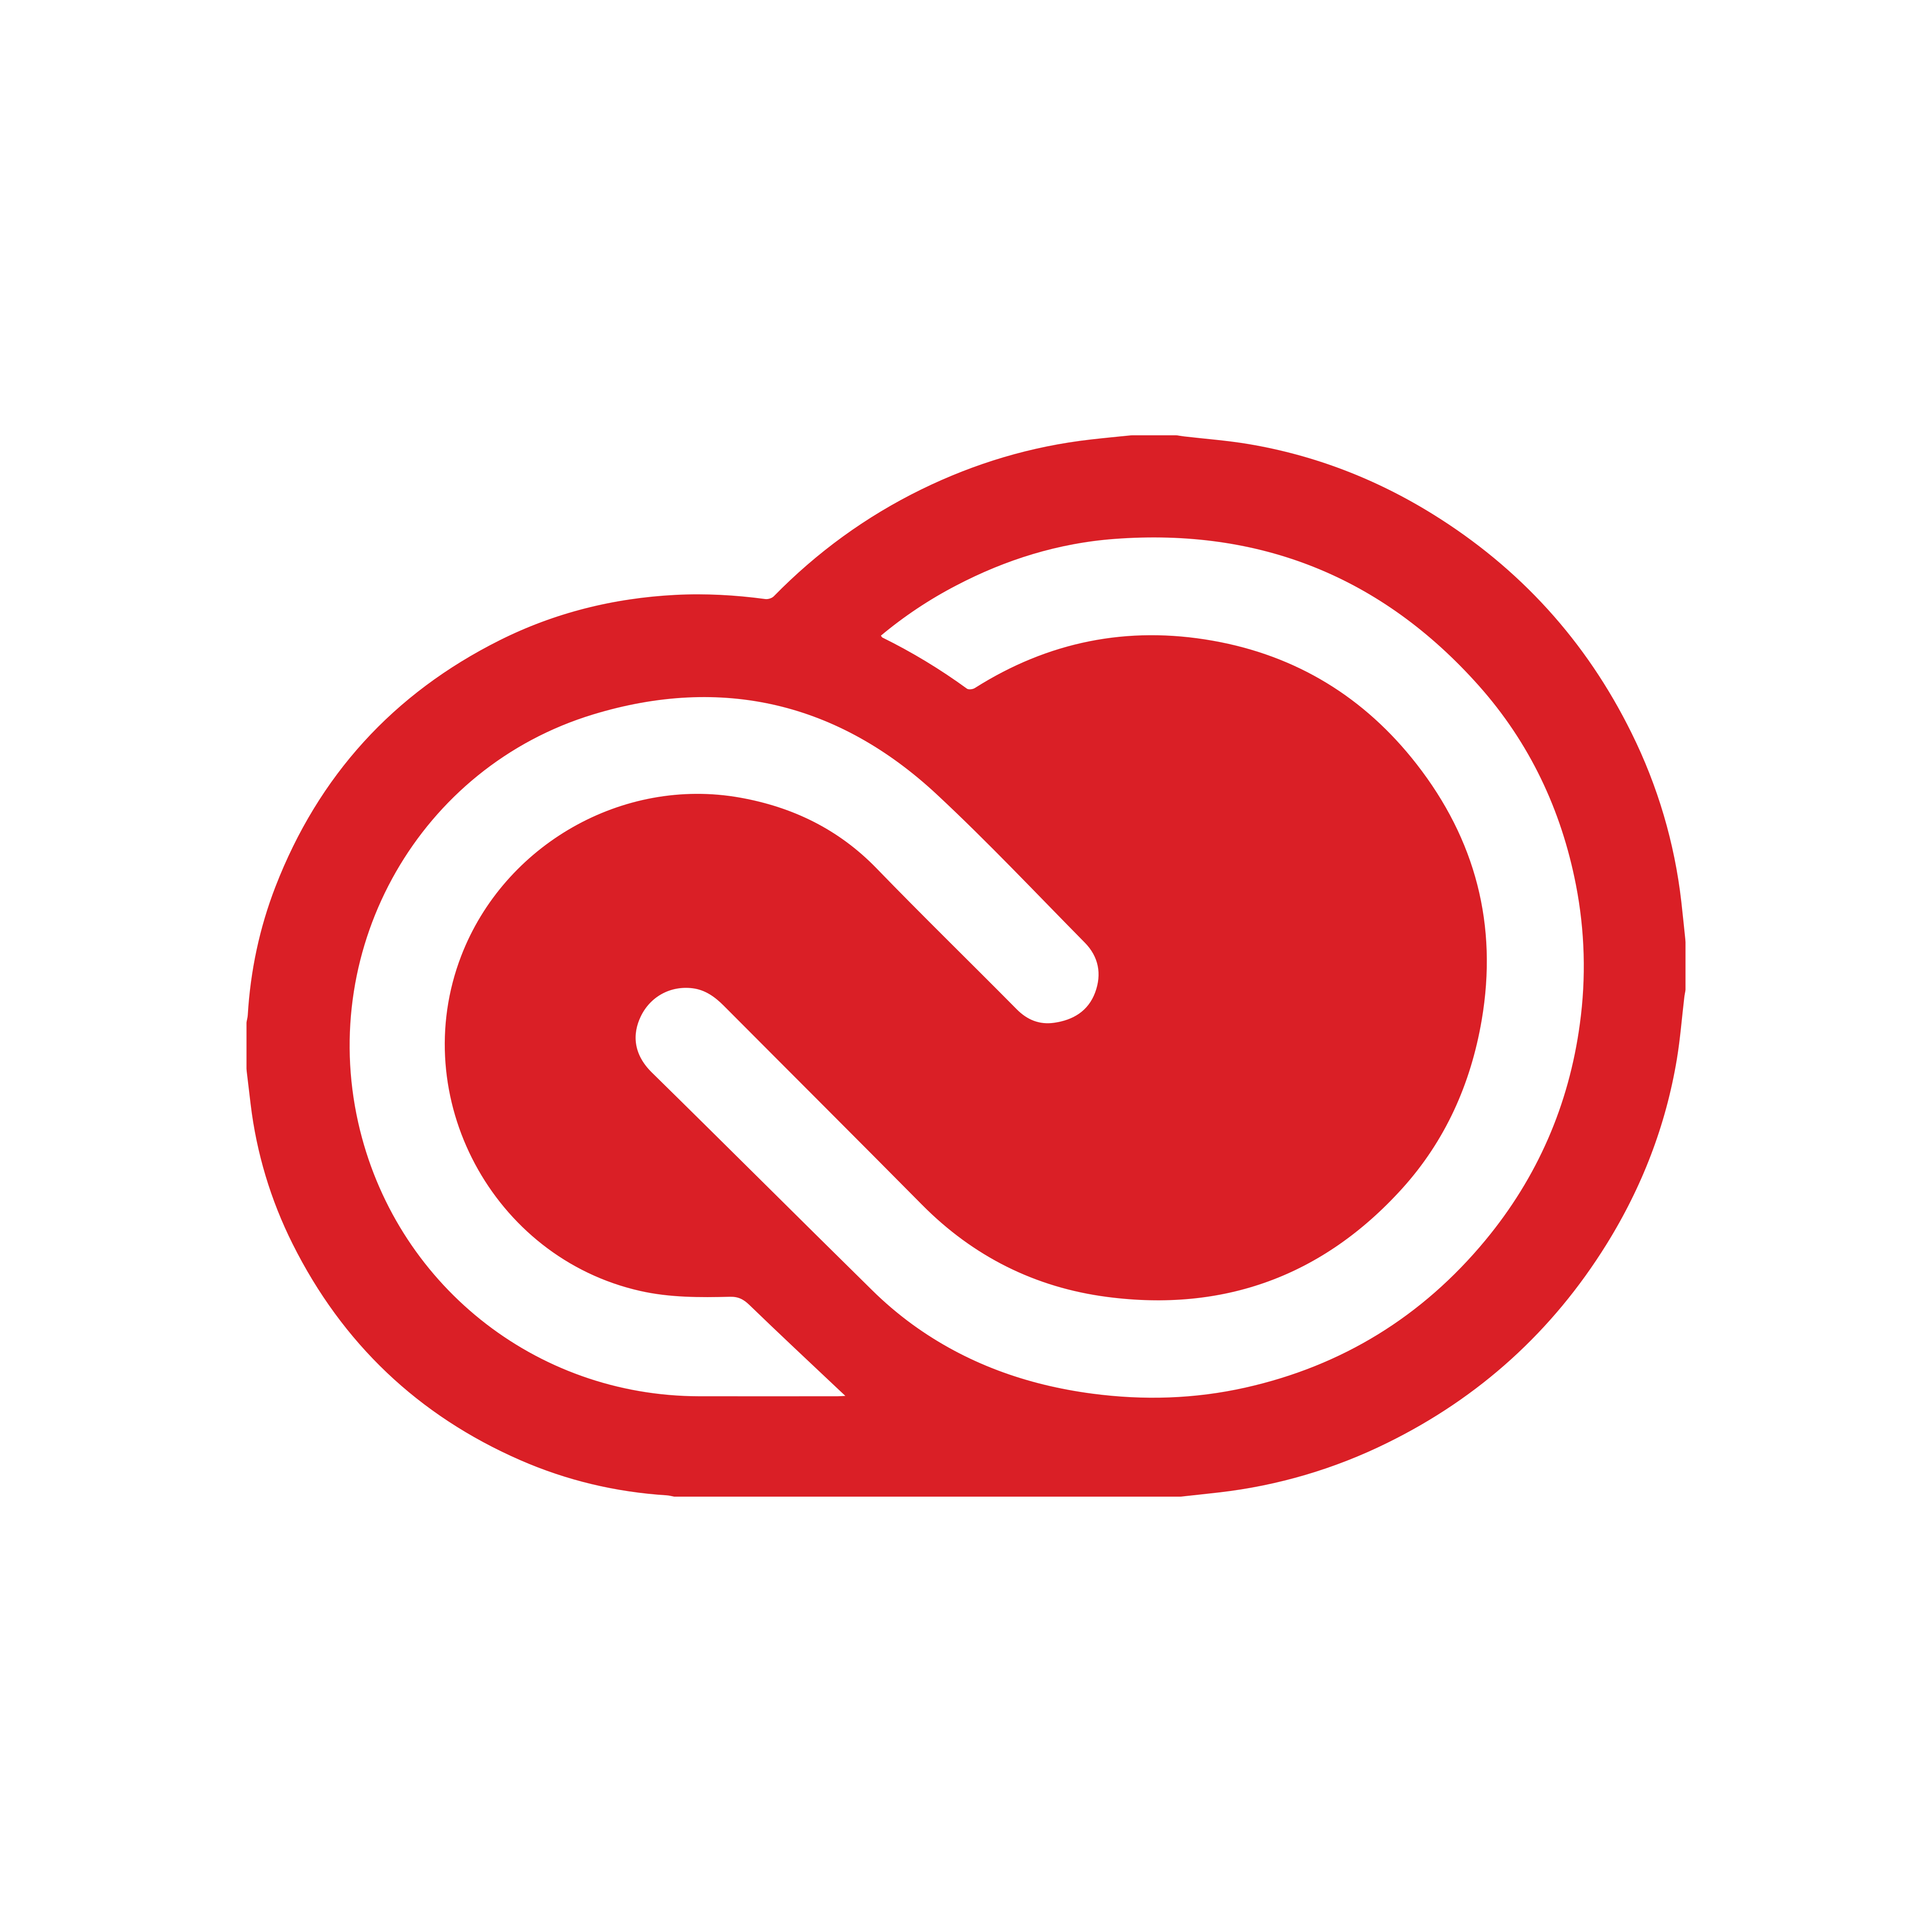 adobe creative cloud logo 0 - Adobe Creative Cloud Logo